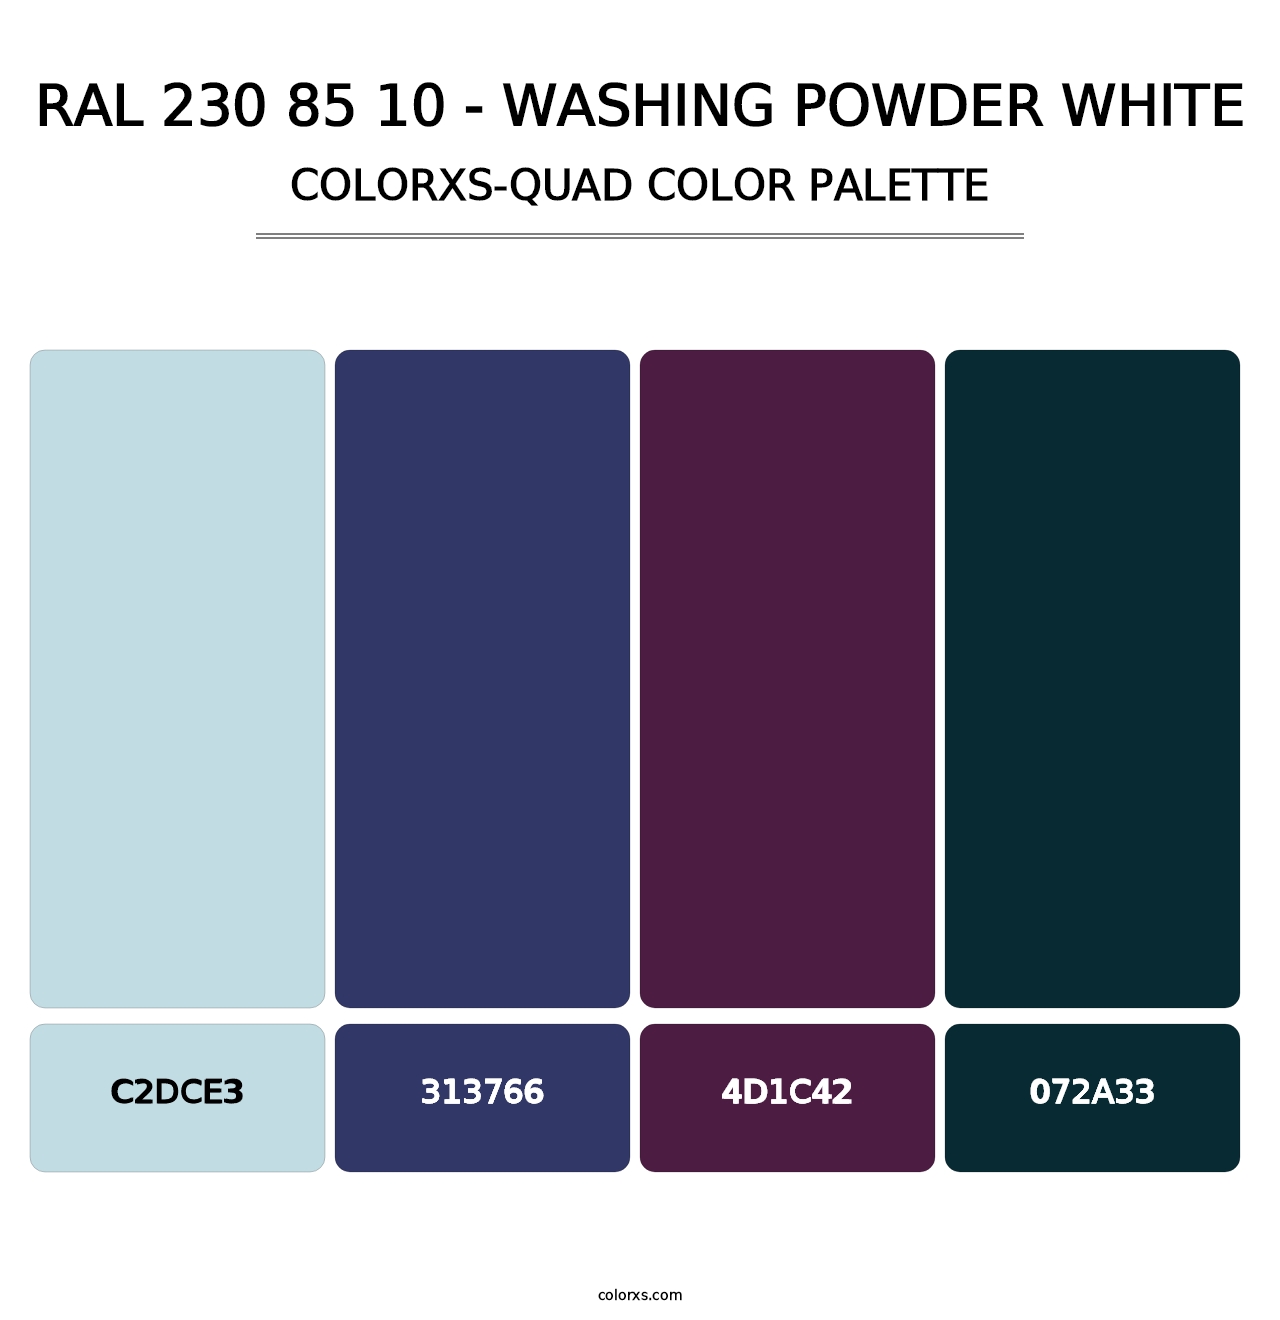 RAL 230 85 10 - Washing Powder White - Colorxs Quad Palette